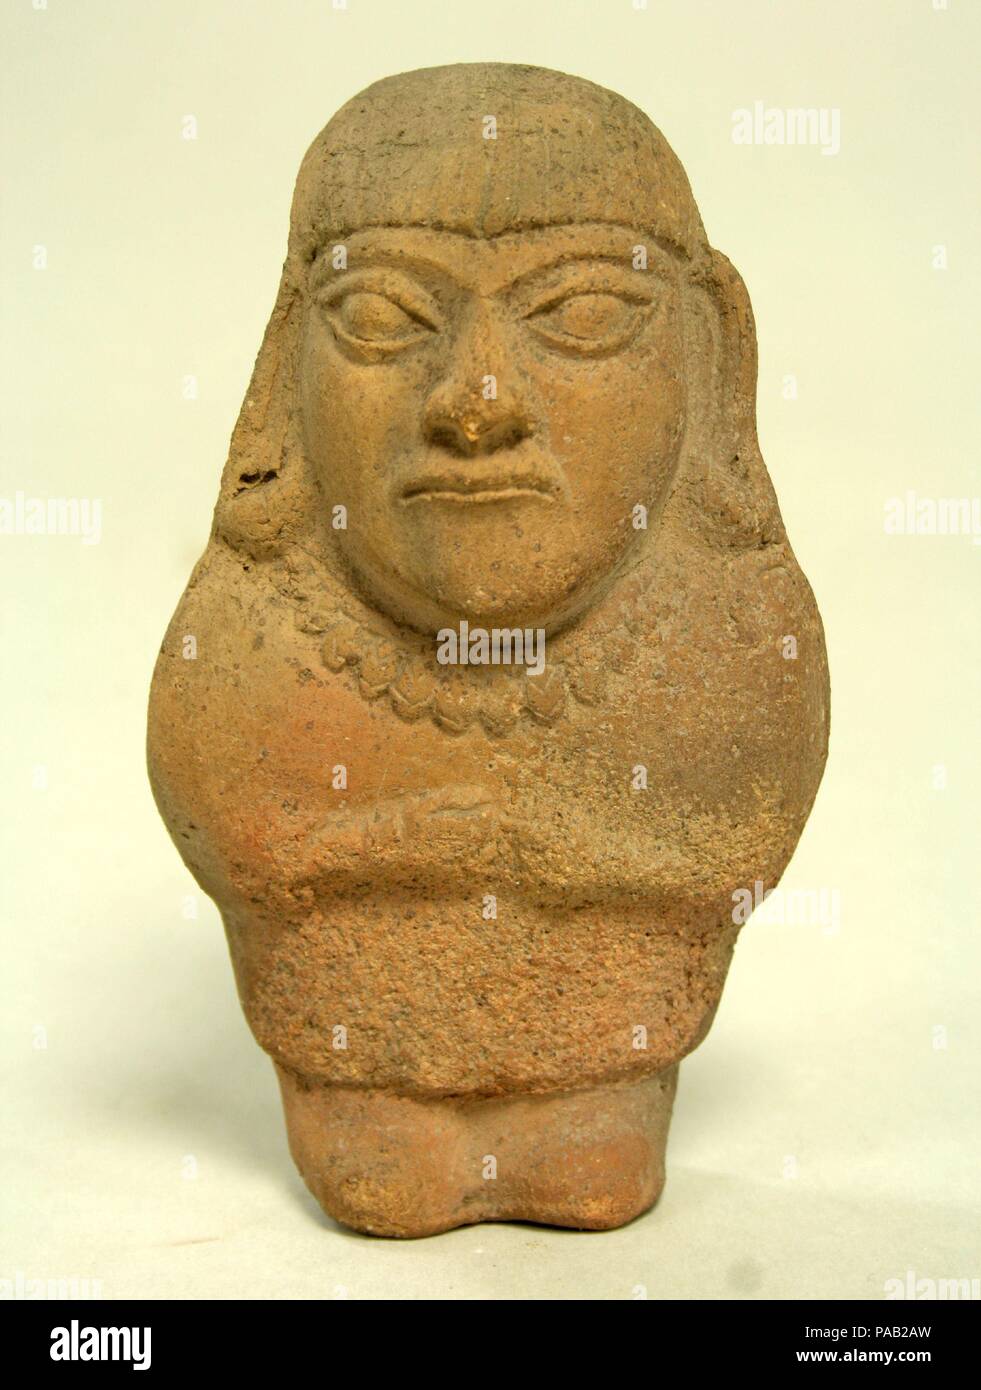 Standing Ceramic Figure. Culture: Moche. Dimensions: H x W: 5 1/4 x 3in. (13.3 x 7.6cm). Date: 3rd-5th century. Museum: Metropolitan Museum of Art, New York, USA. Stock Photo